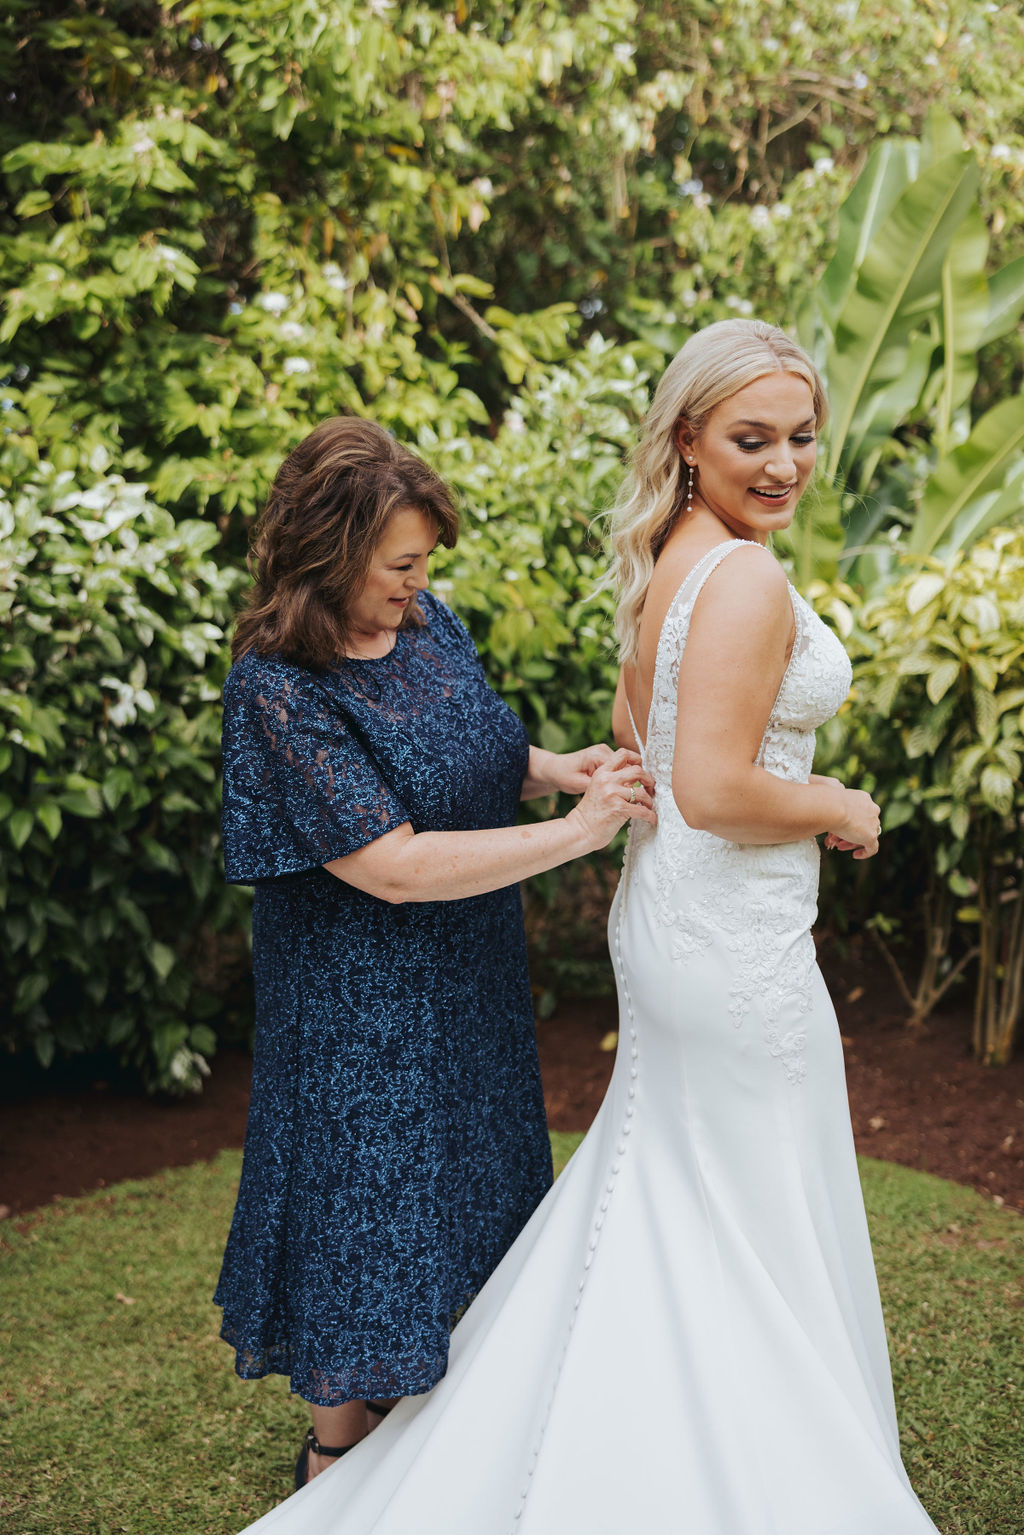 mother helping bride get into wedding dress